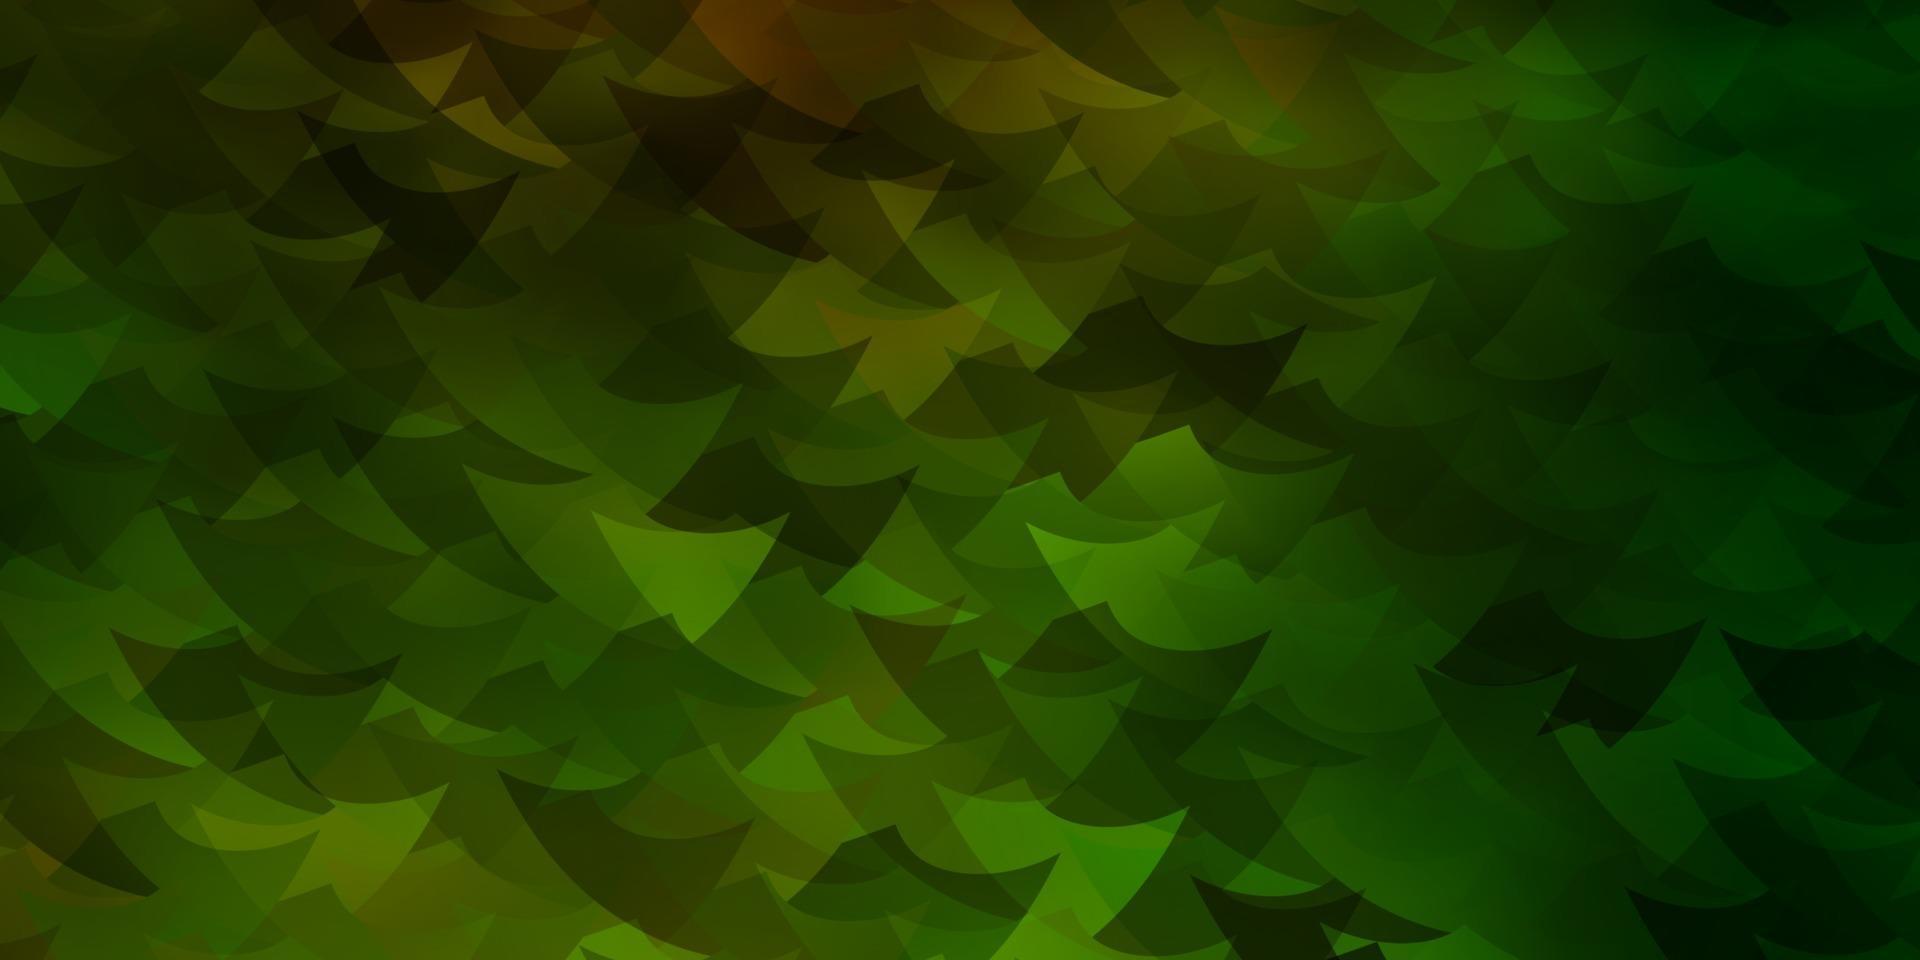 textura vector verde e amarelo escuro com estilo poli com cubos.